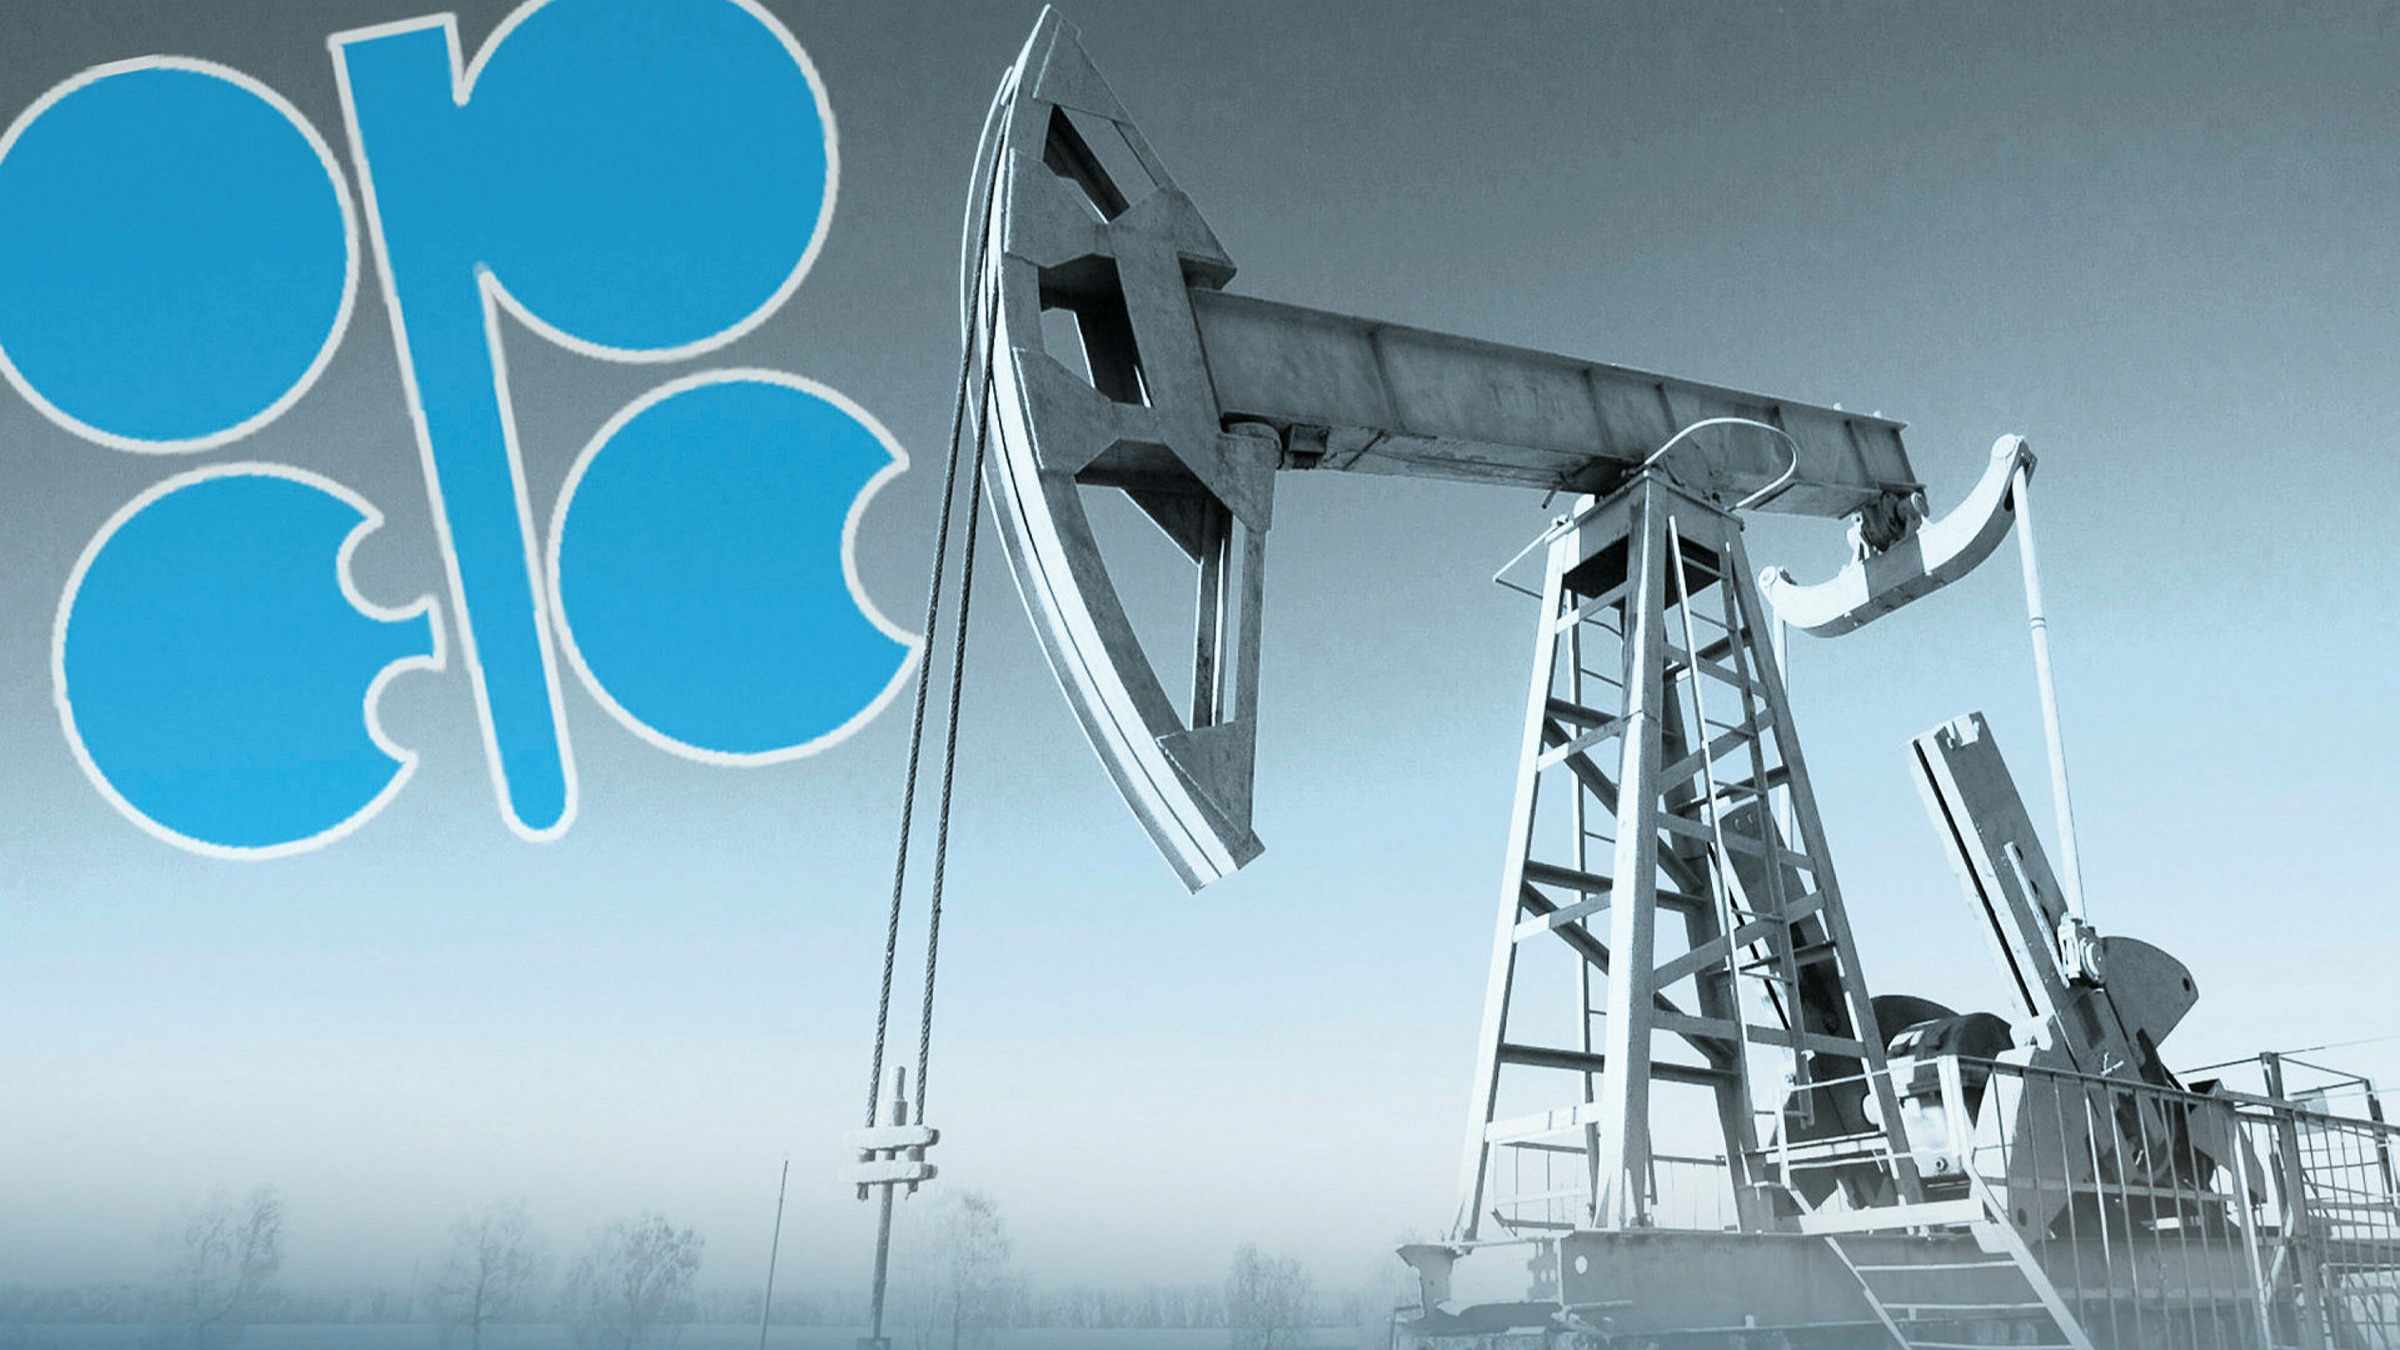 opec turmoil oil prices climbing